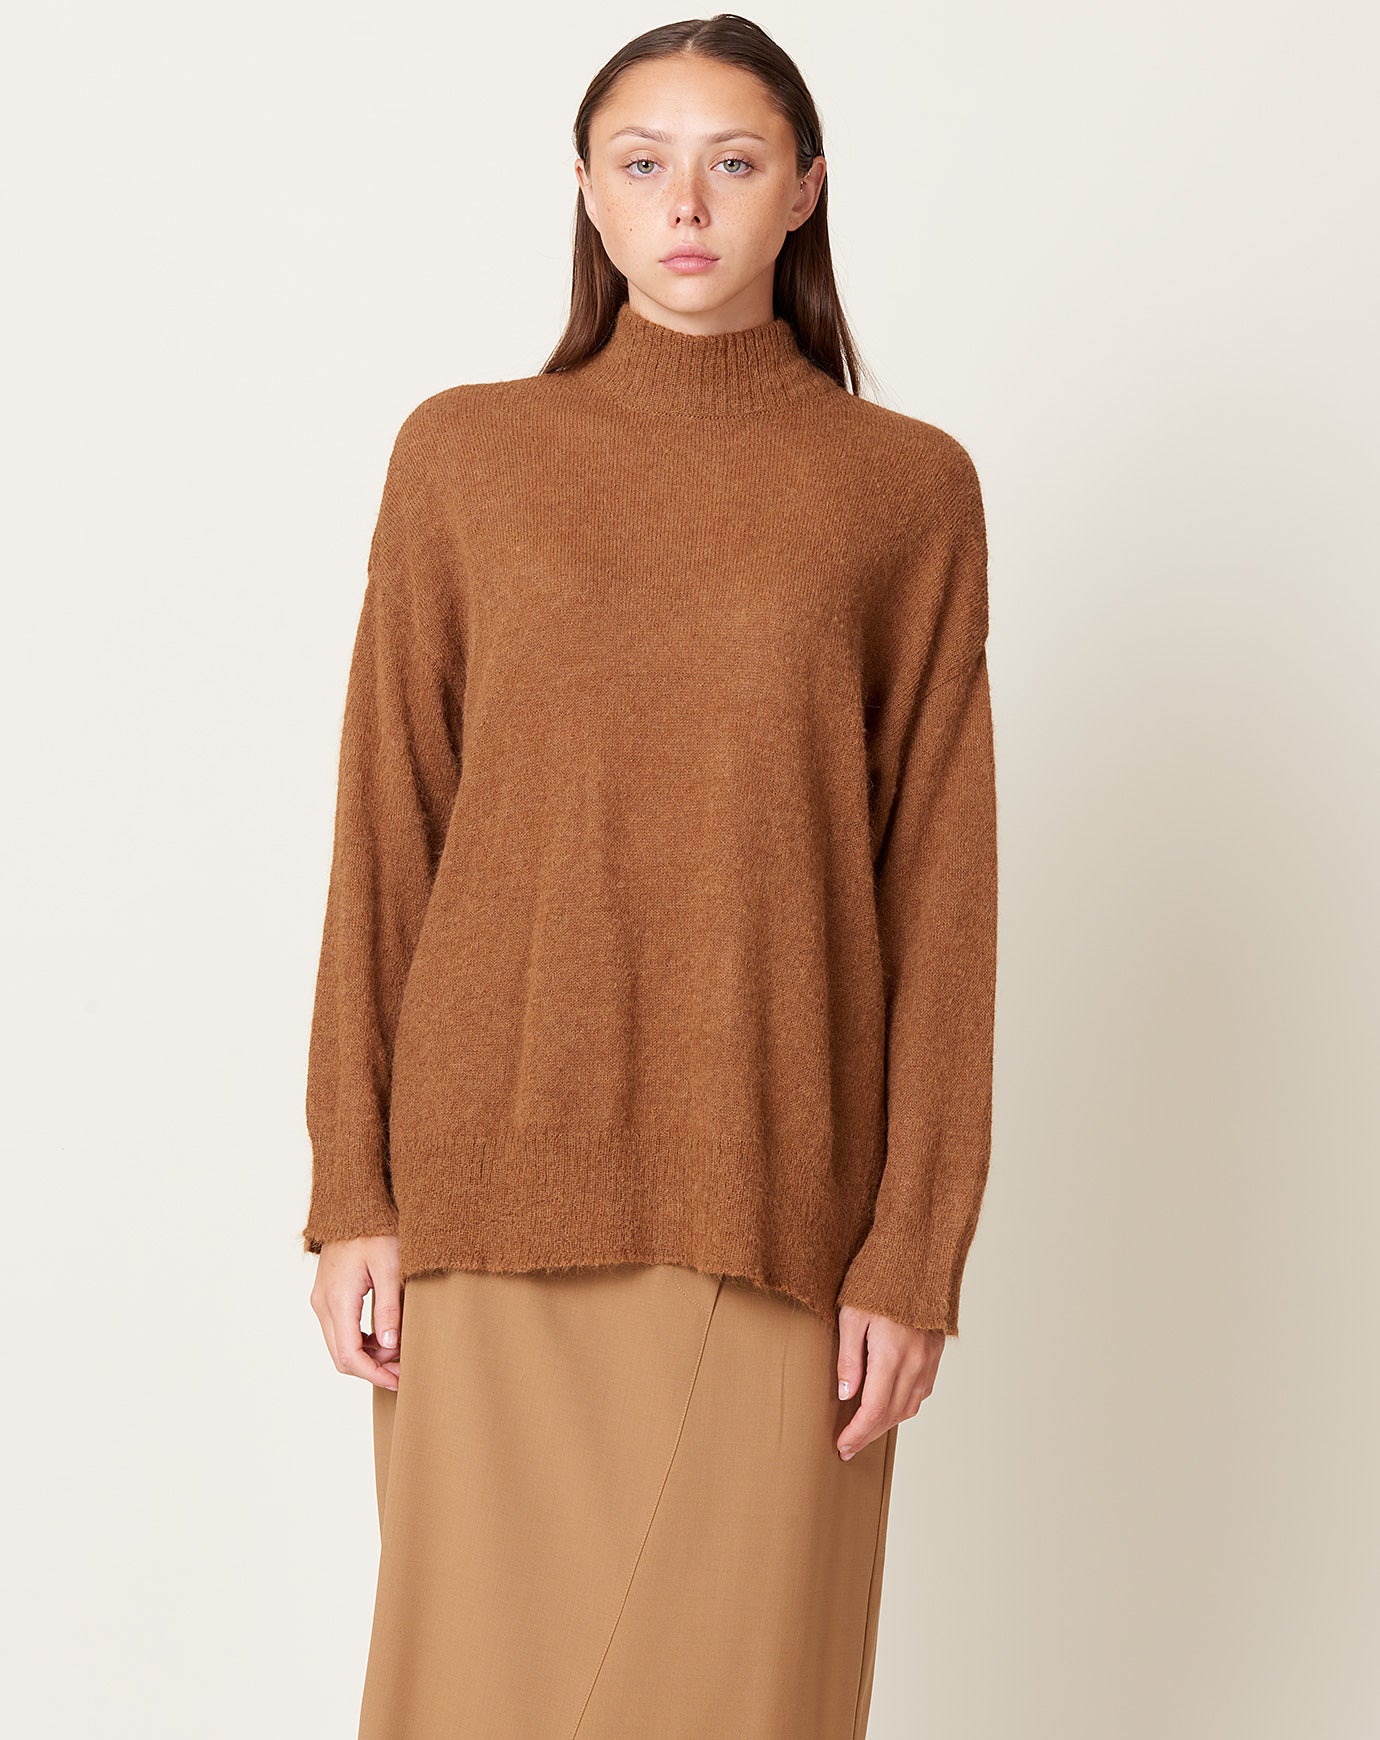 Cordera Suri Turtleneck Sweater in Camel